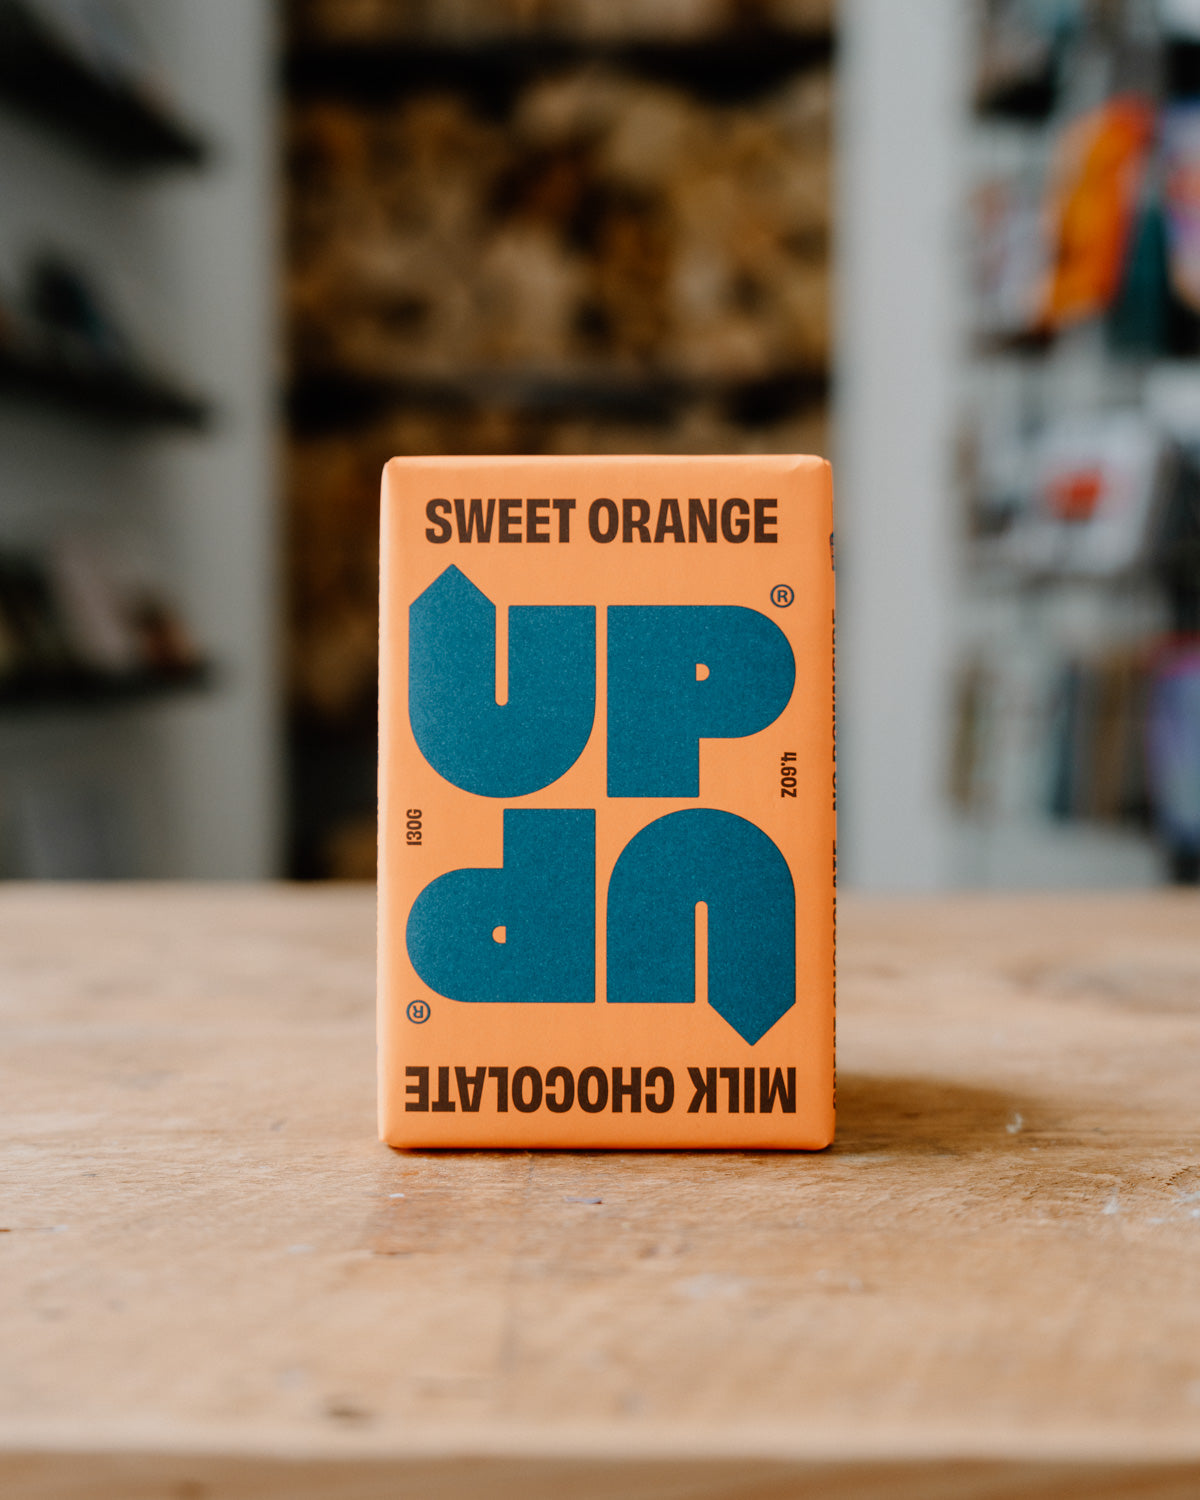 UP-UP Chocolate - Sweet Orange Milk Chocolate Bar